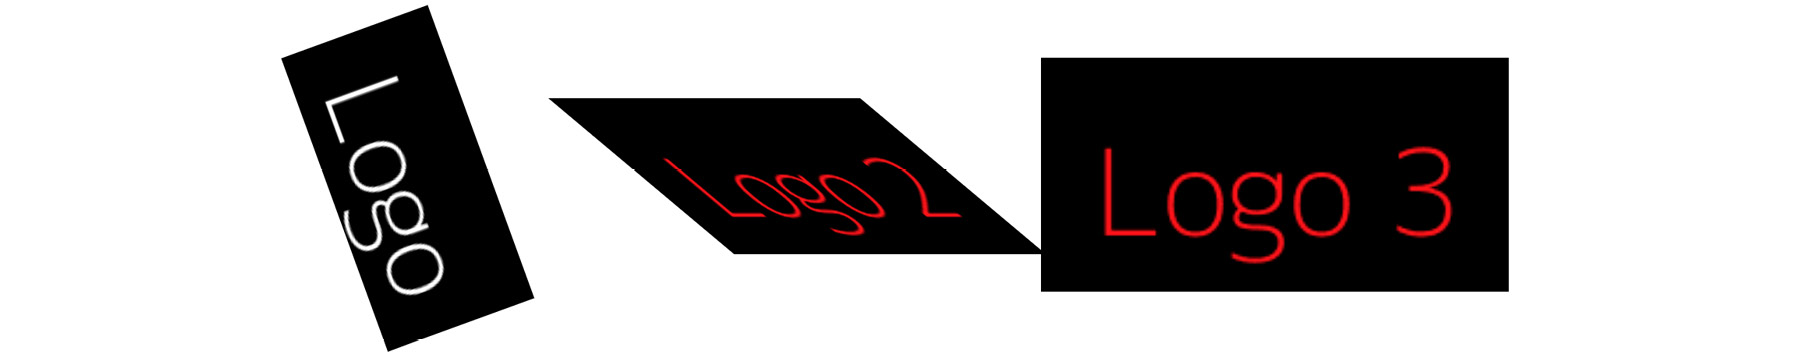 Figure 10.14: Logo outputs
